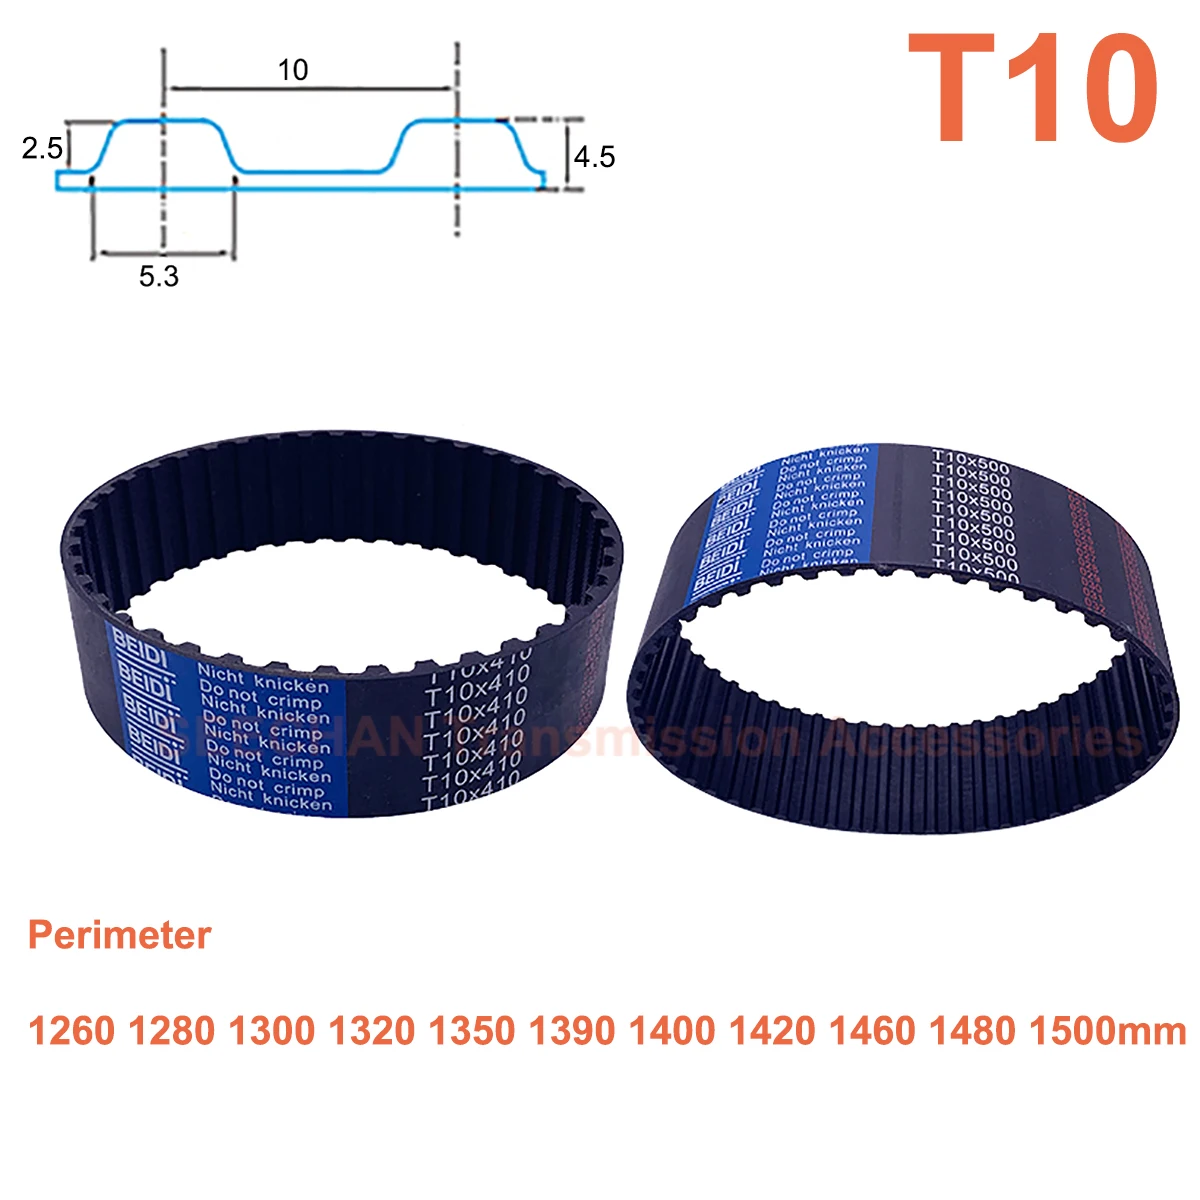 

Trapezoid T10 Synchronous Belt Perimeter 1260mm - 1500mm Rubber with Fiberglass Core Width 15/20/25/30/40/50mm Timing Belt